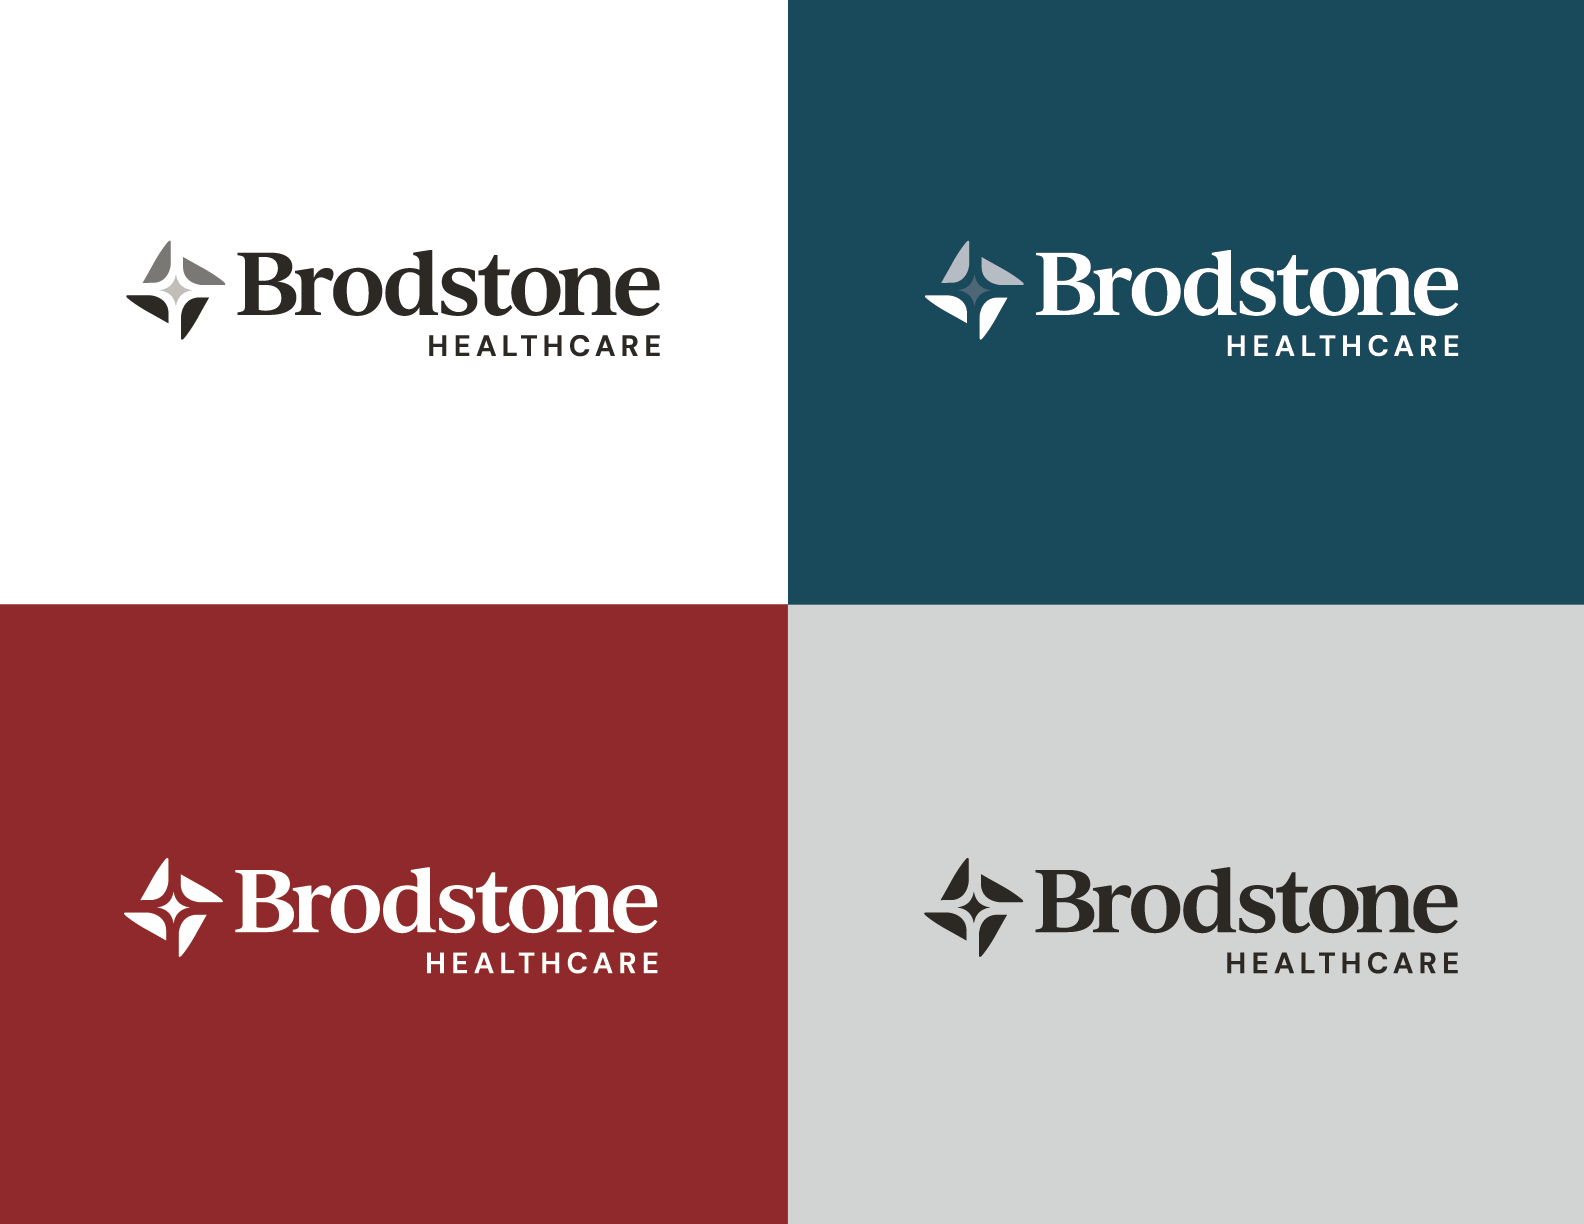 Brodstone Healthcare Brand Guide Logo Options